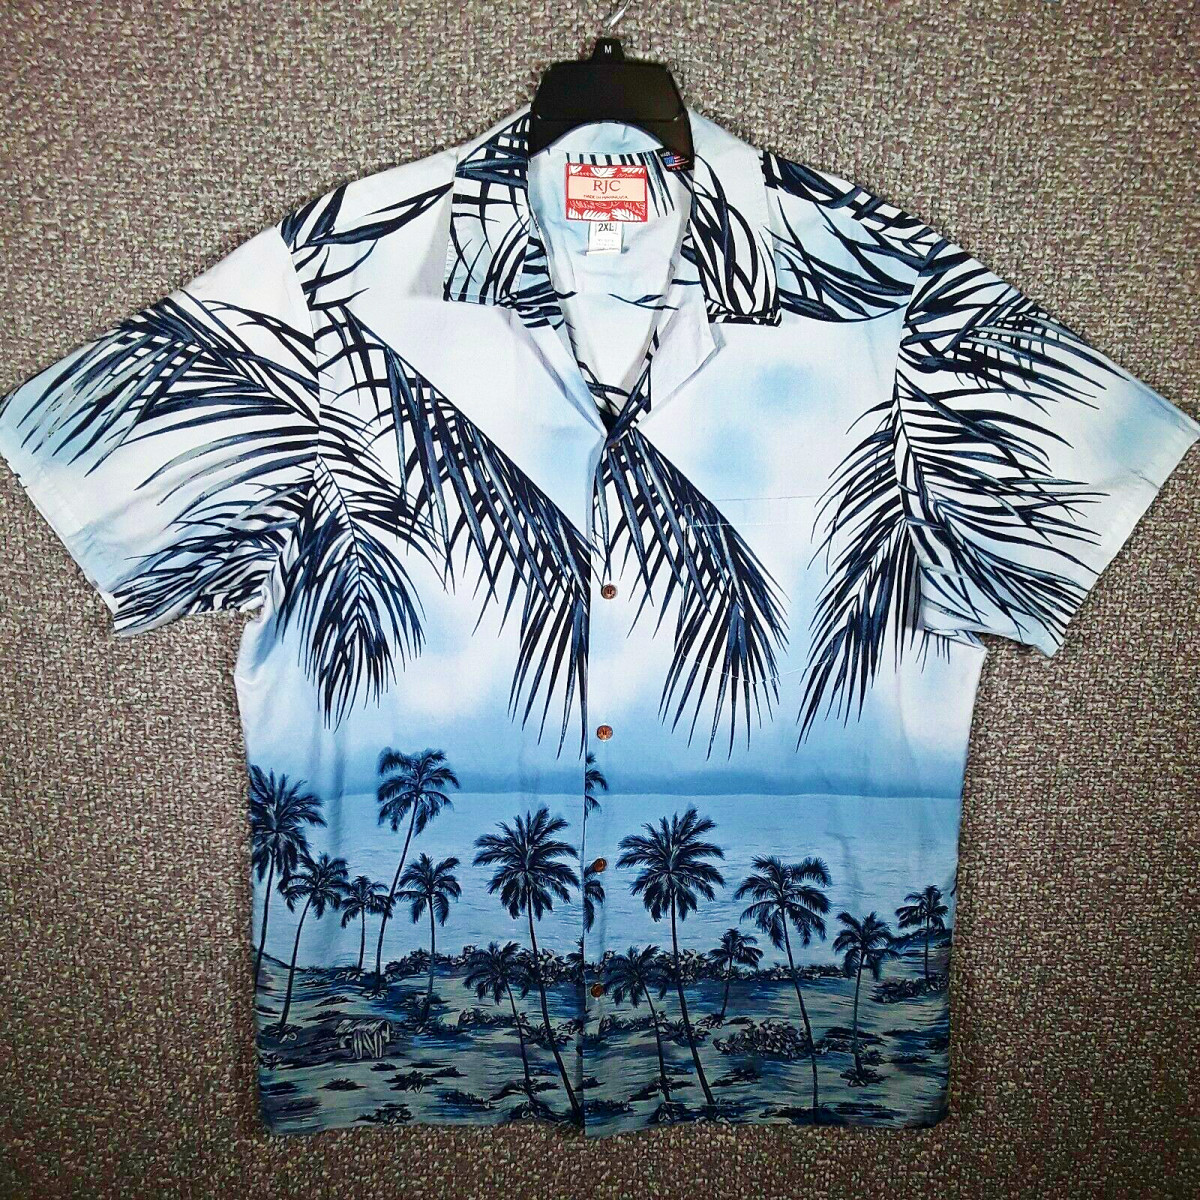 RJC Hawaiian Casual Shirt Men's 2XL Tropical Palms Made In USA, Dark blue, light blue, white.